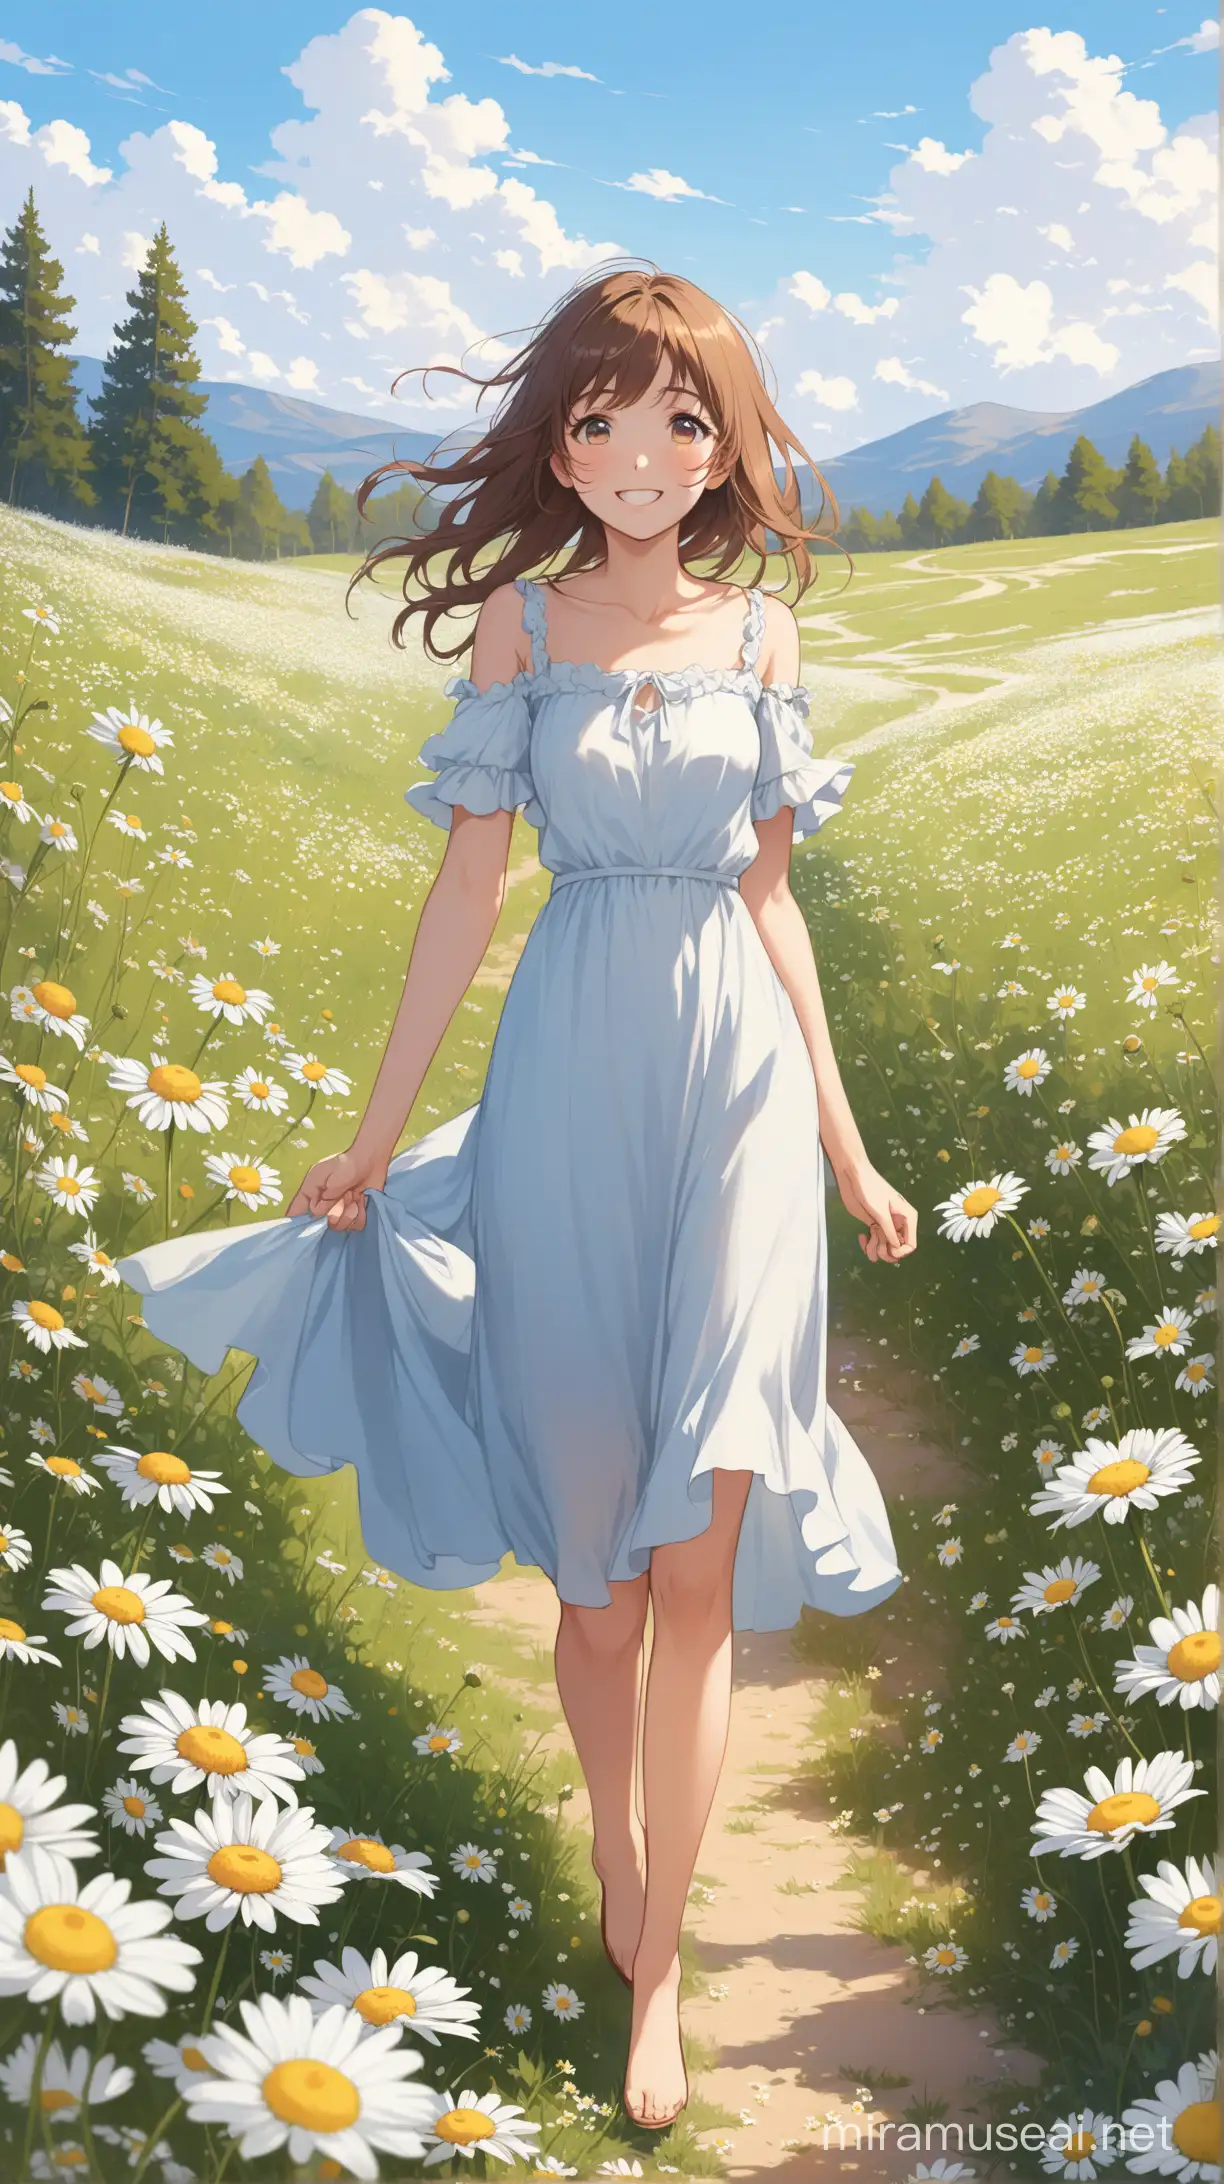 a cheerful girl in a dress walks through a chamomile field